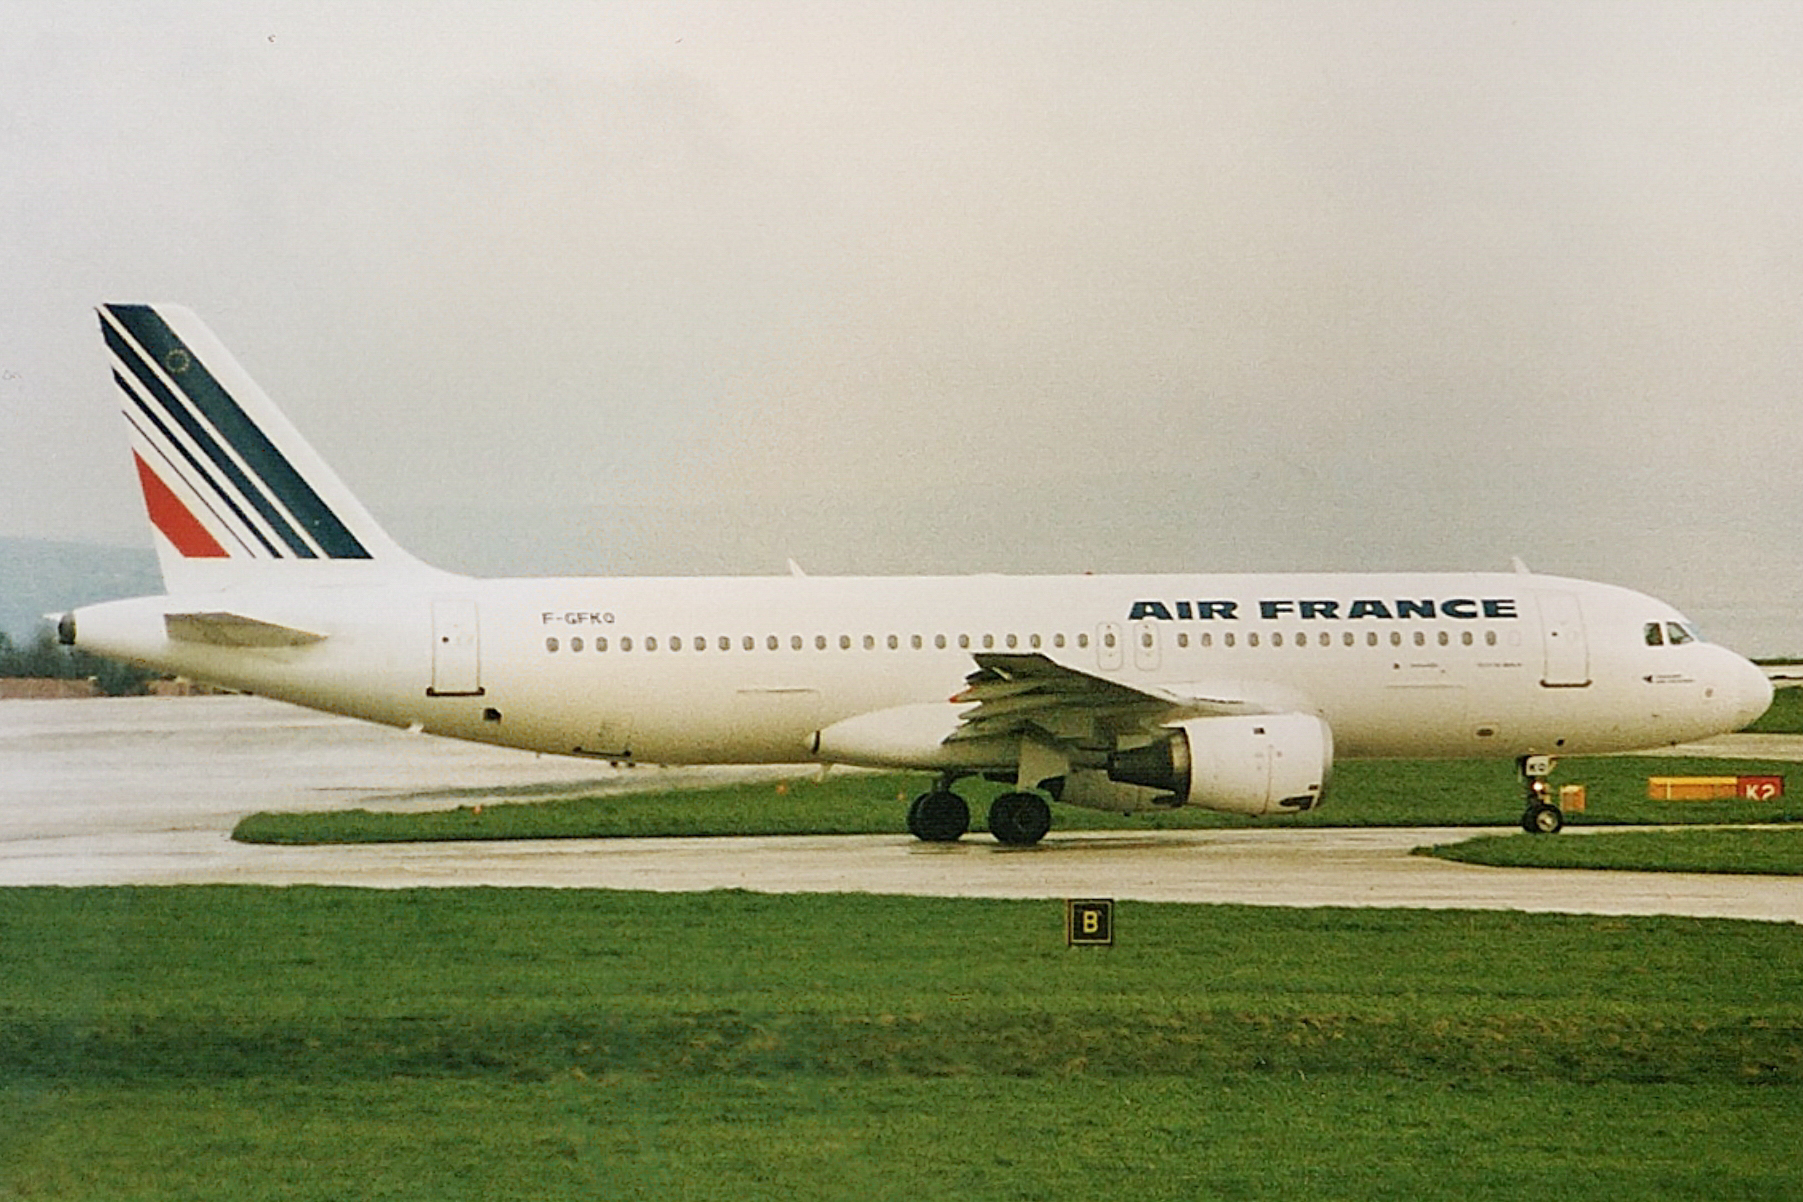 F-GFKQ /FGFKQ  Air France Airbus A320 Airframe Information - AVSpotters.com